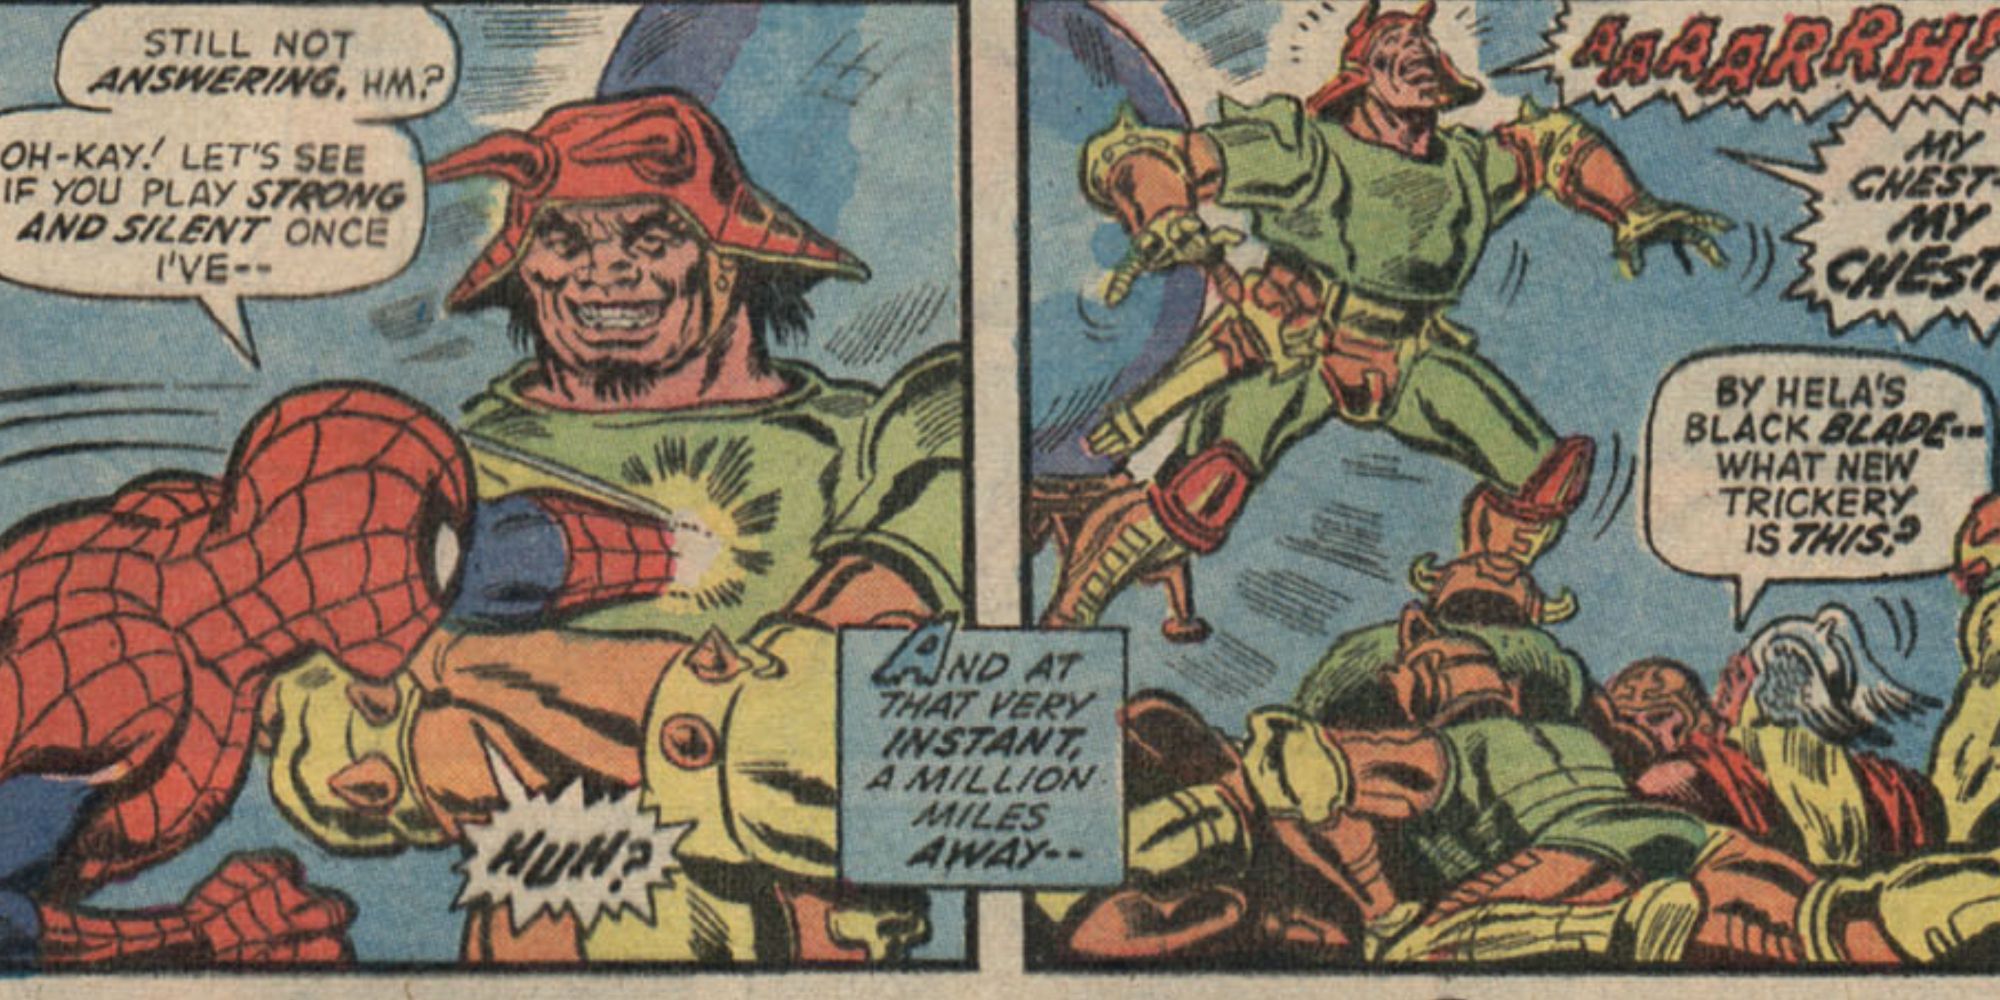 Spider-Man fights Kryllk the Cruel in Marvel Comics.